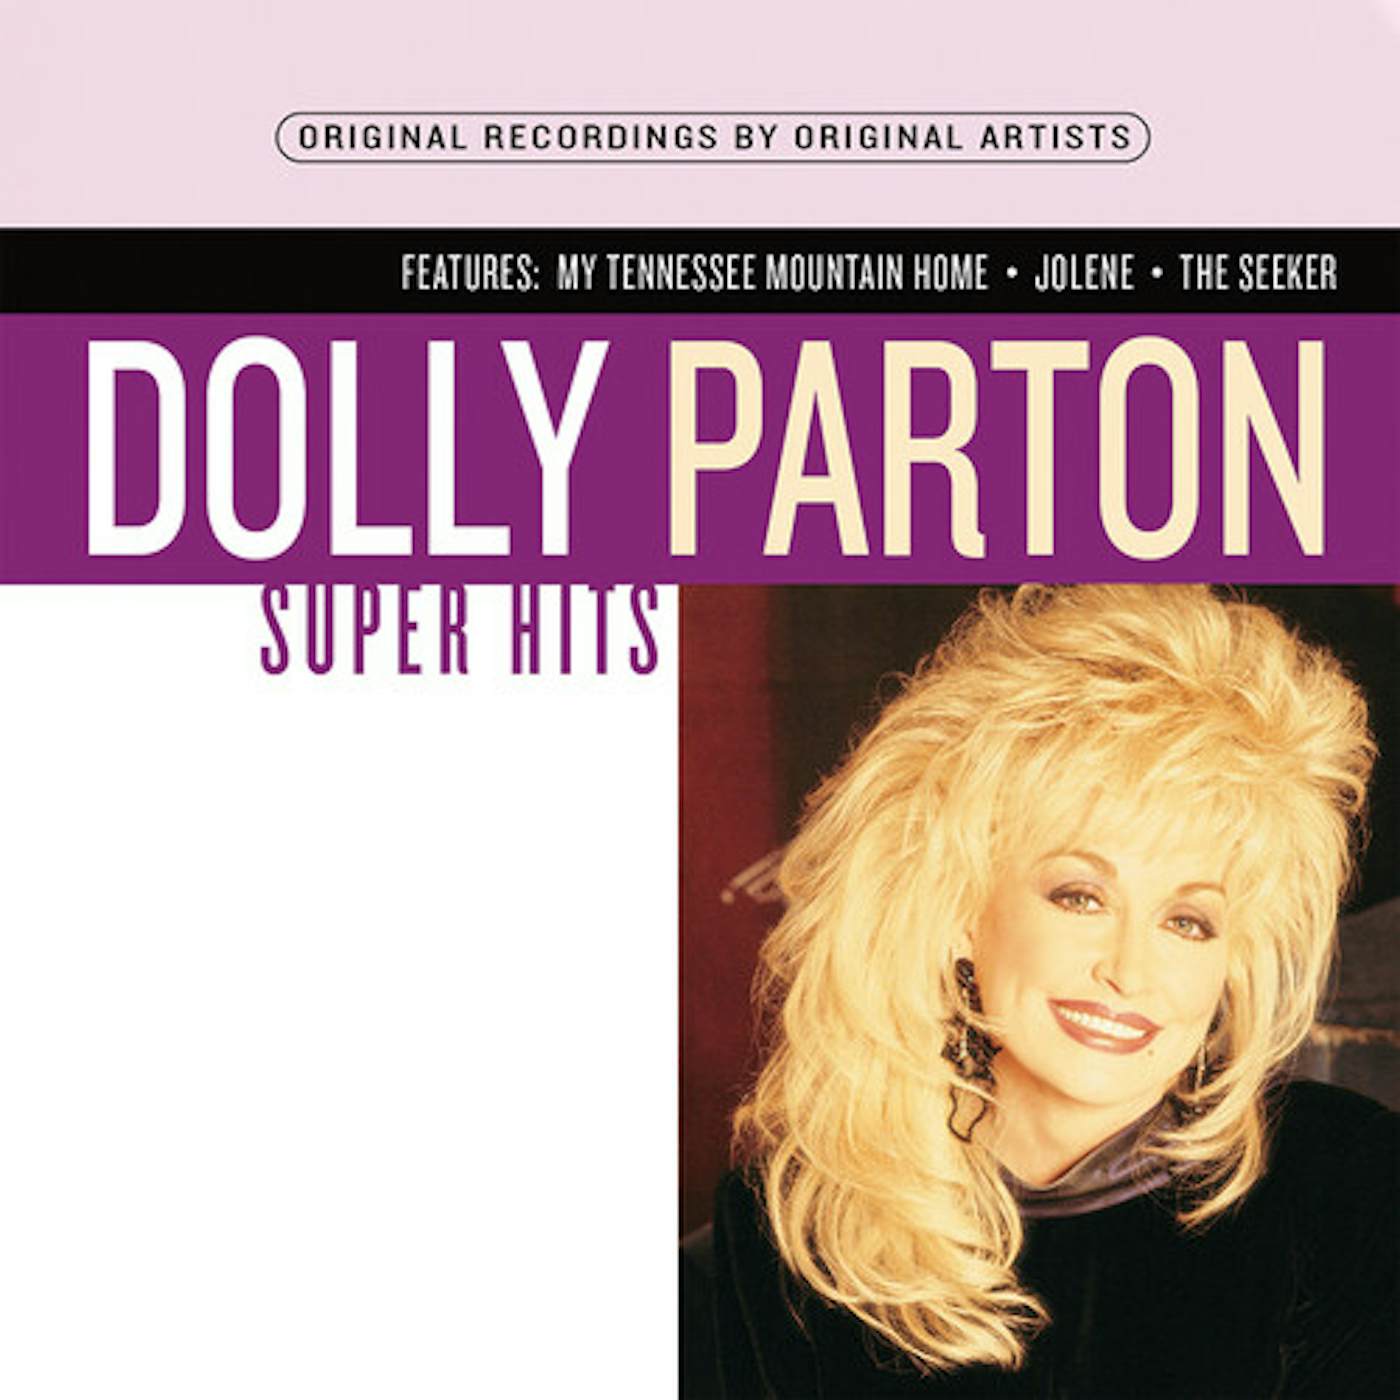 Dolly Parton SUPER HITS CD